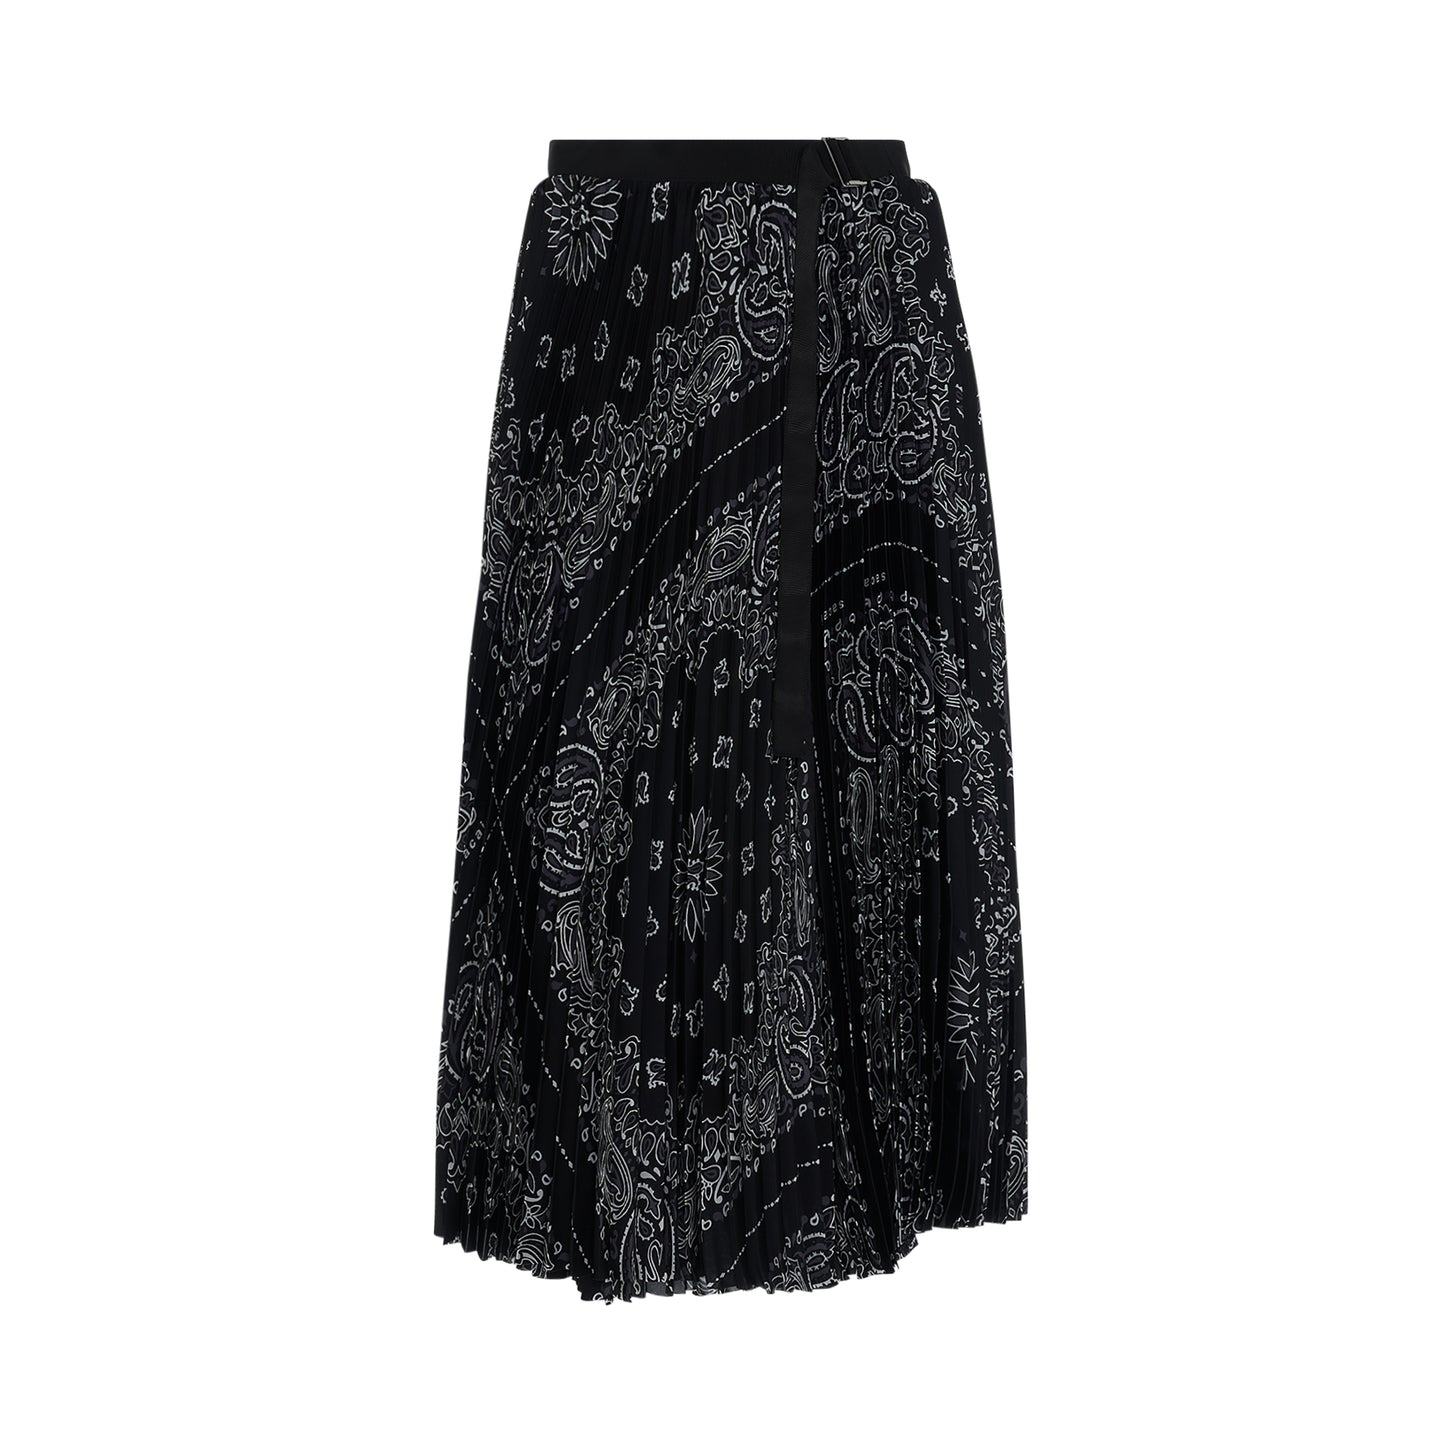 Bandana Print Skirt in Black